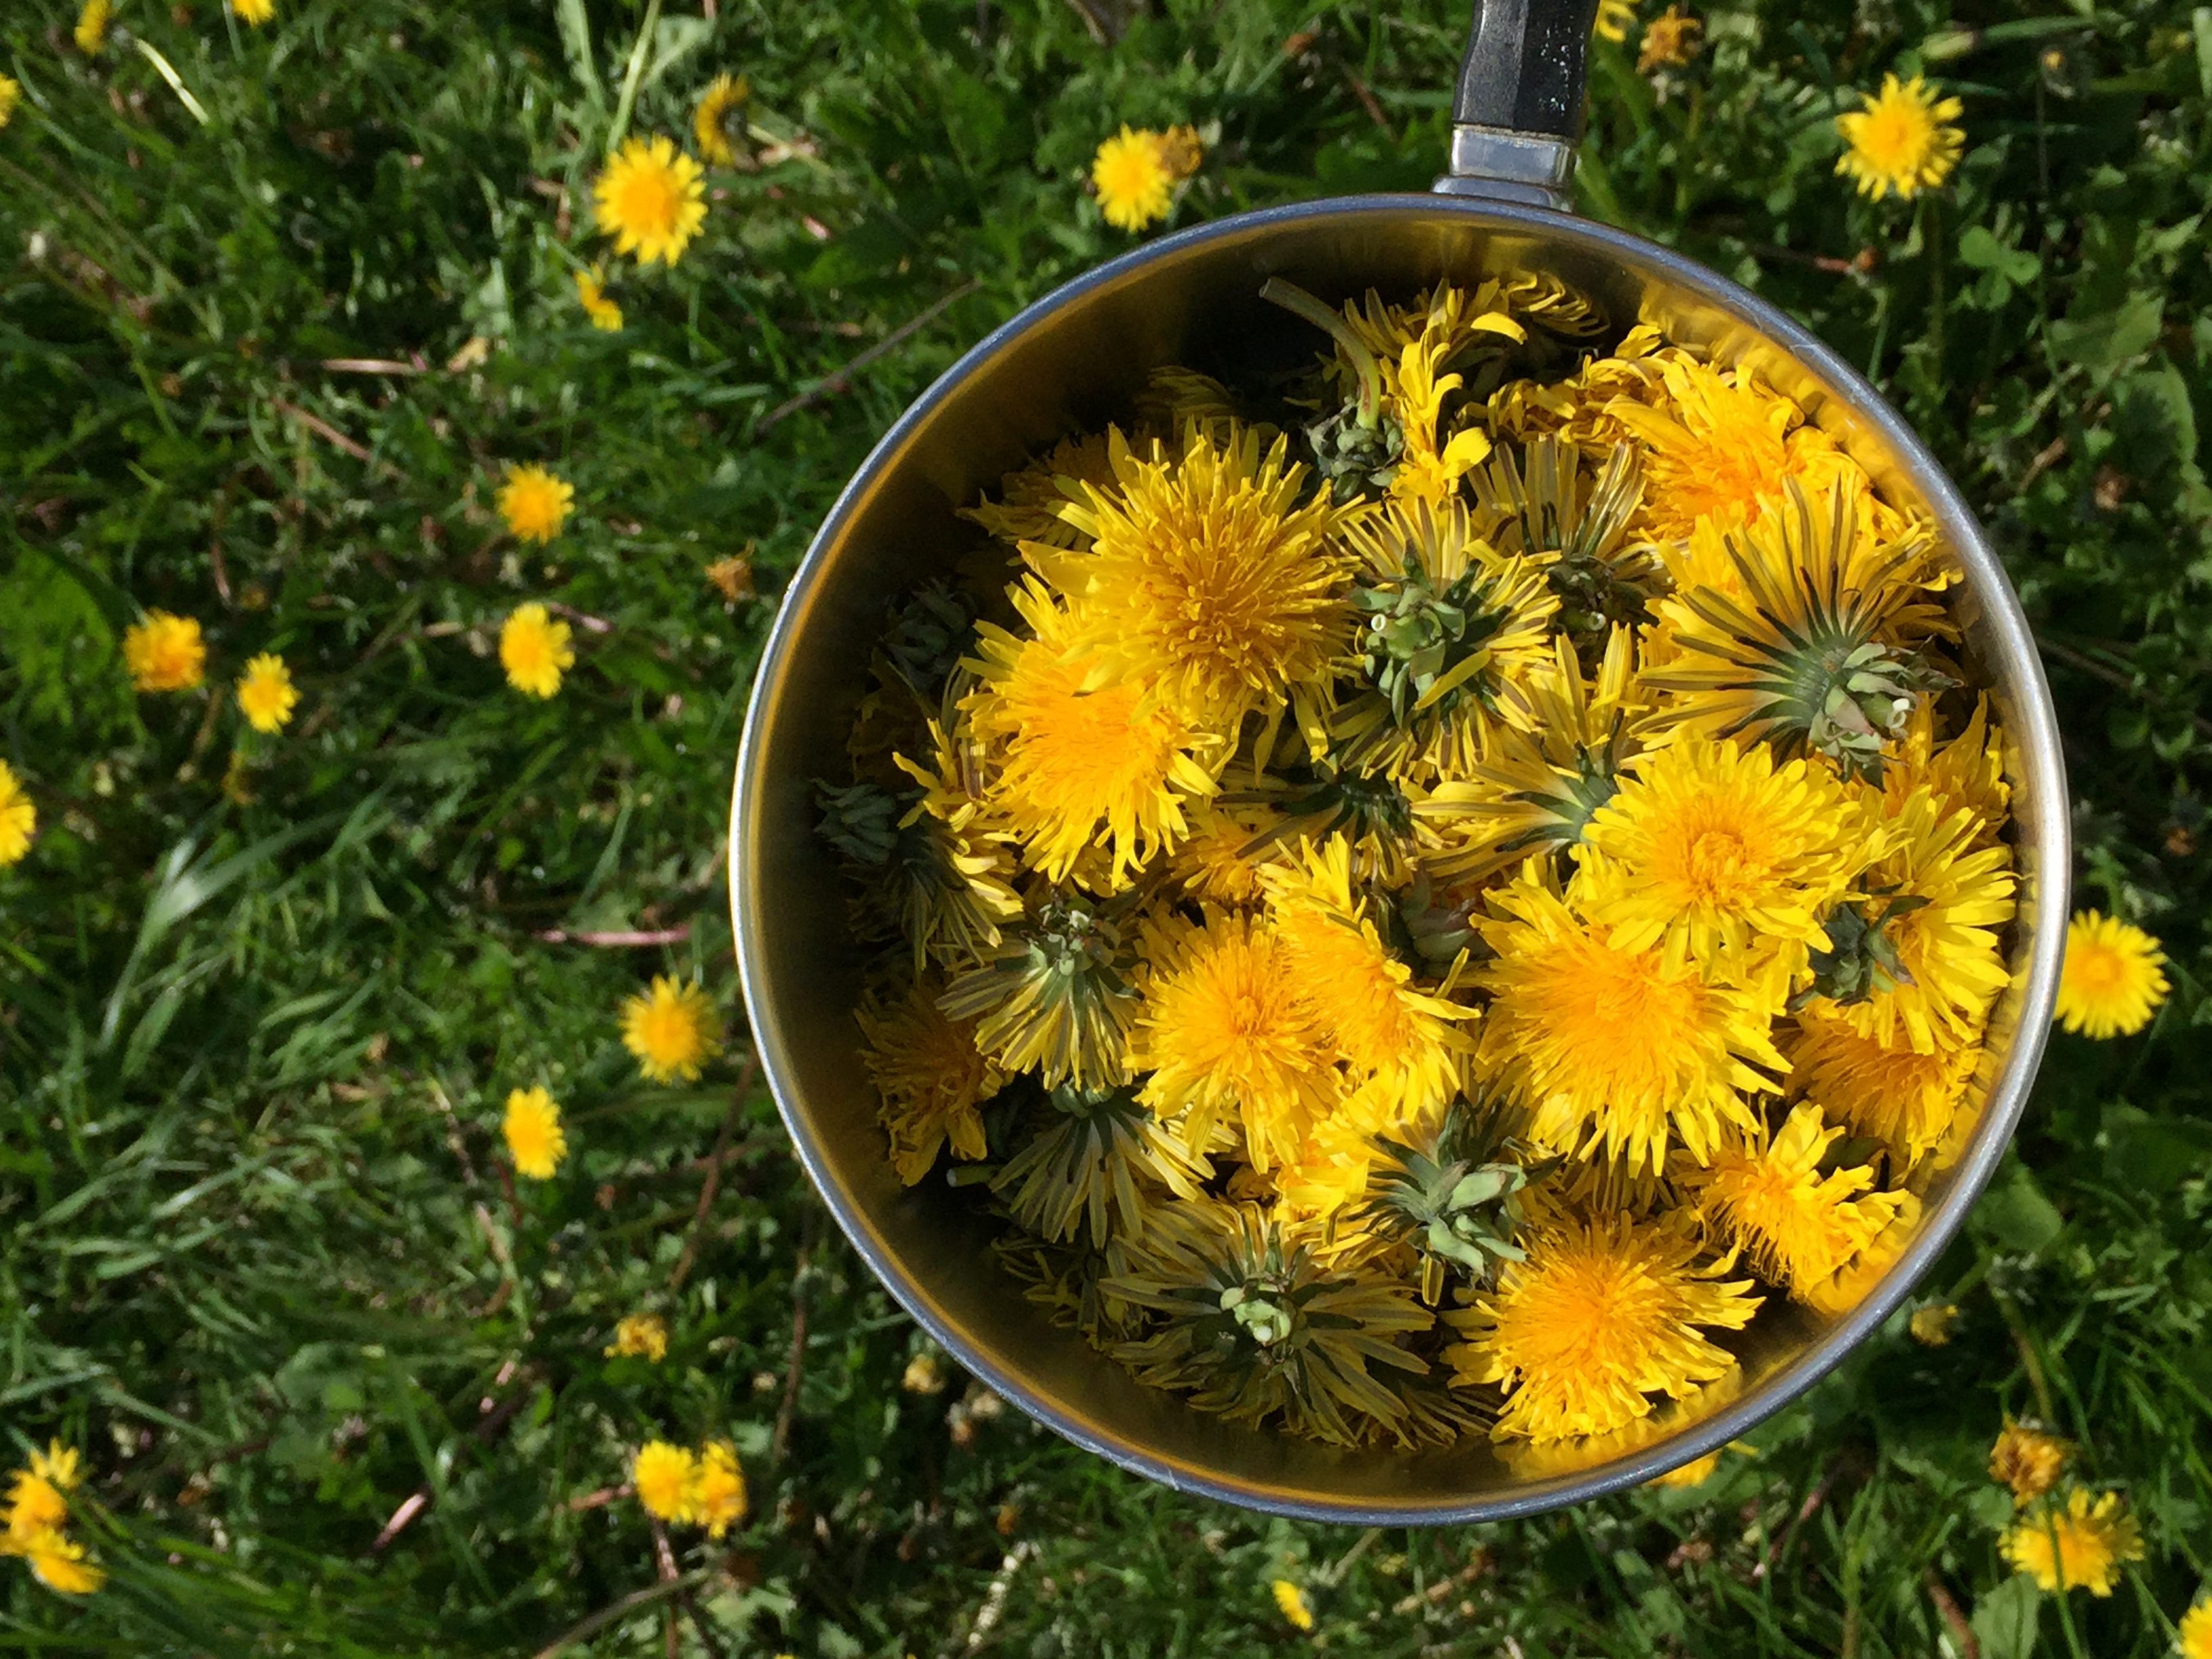 How to Make Dandelion Salve (with Essential Oils) - CITY GIRL FARMING